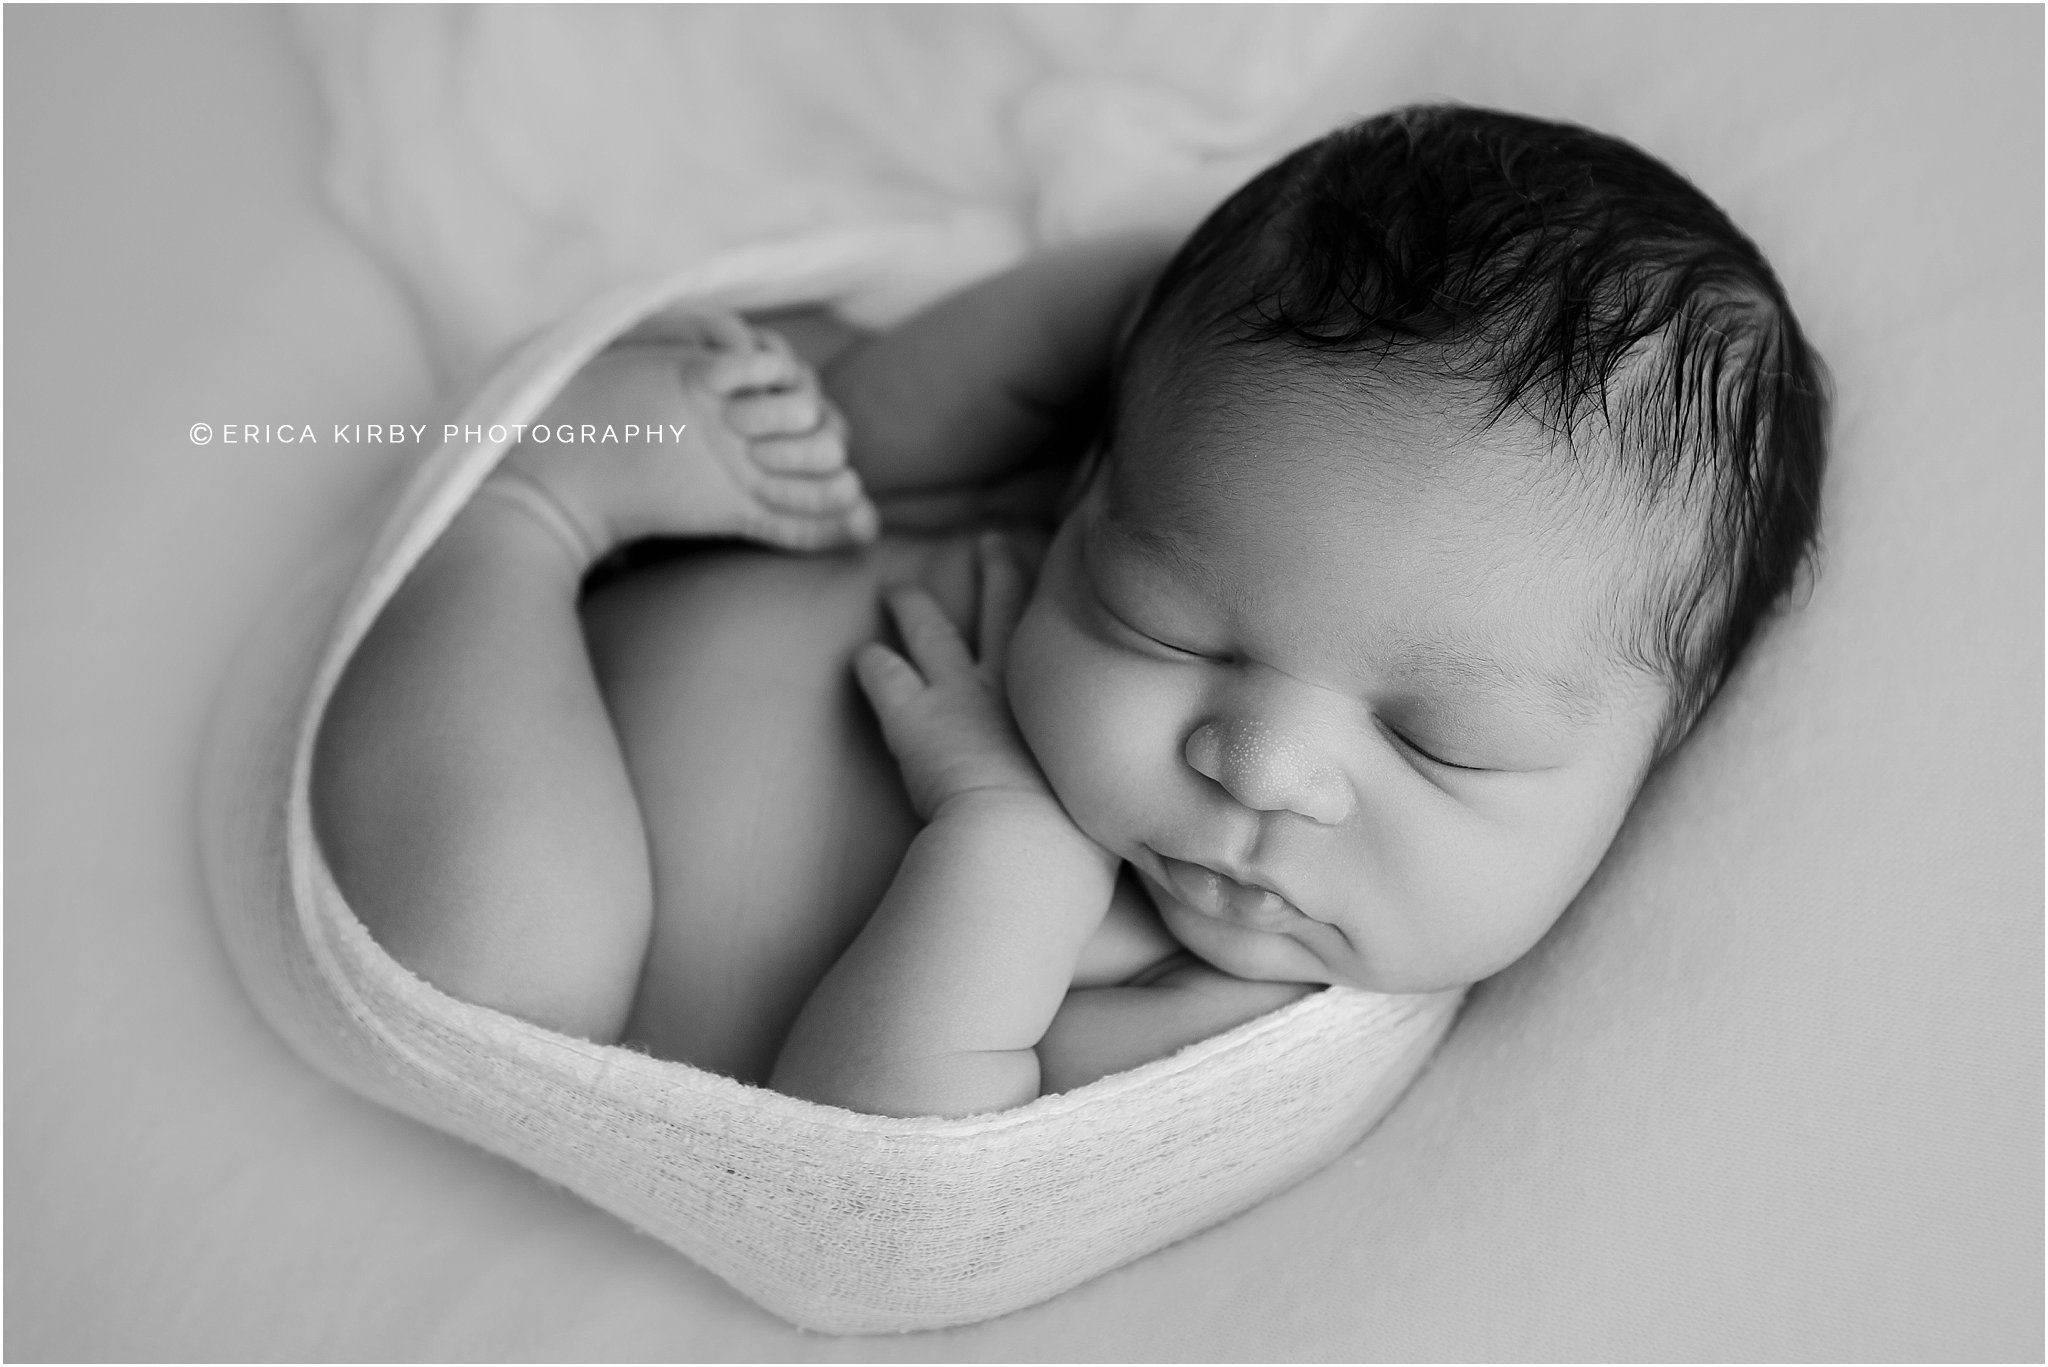 Newborn Photographer Fayettteville Arkansas - Best Newborn Photographer Northwest Arkansas Bentonville Fayetteville AR - African American Baby boy newborn session - erica kirby photography